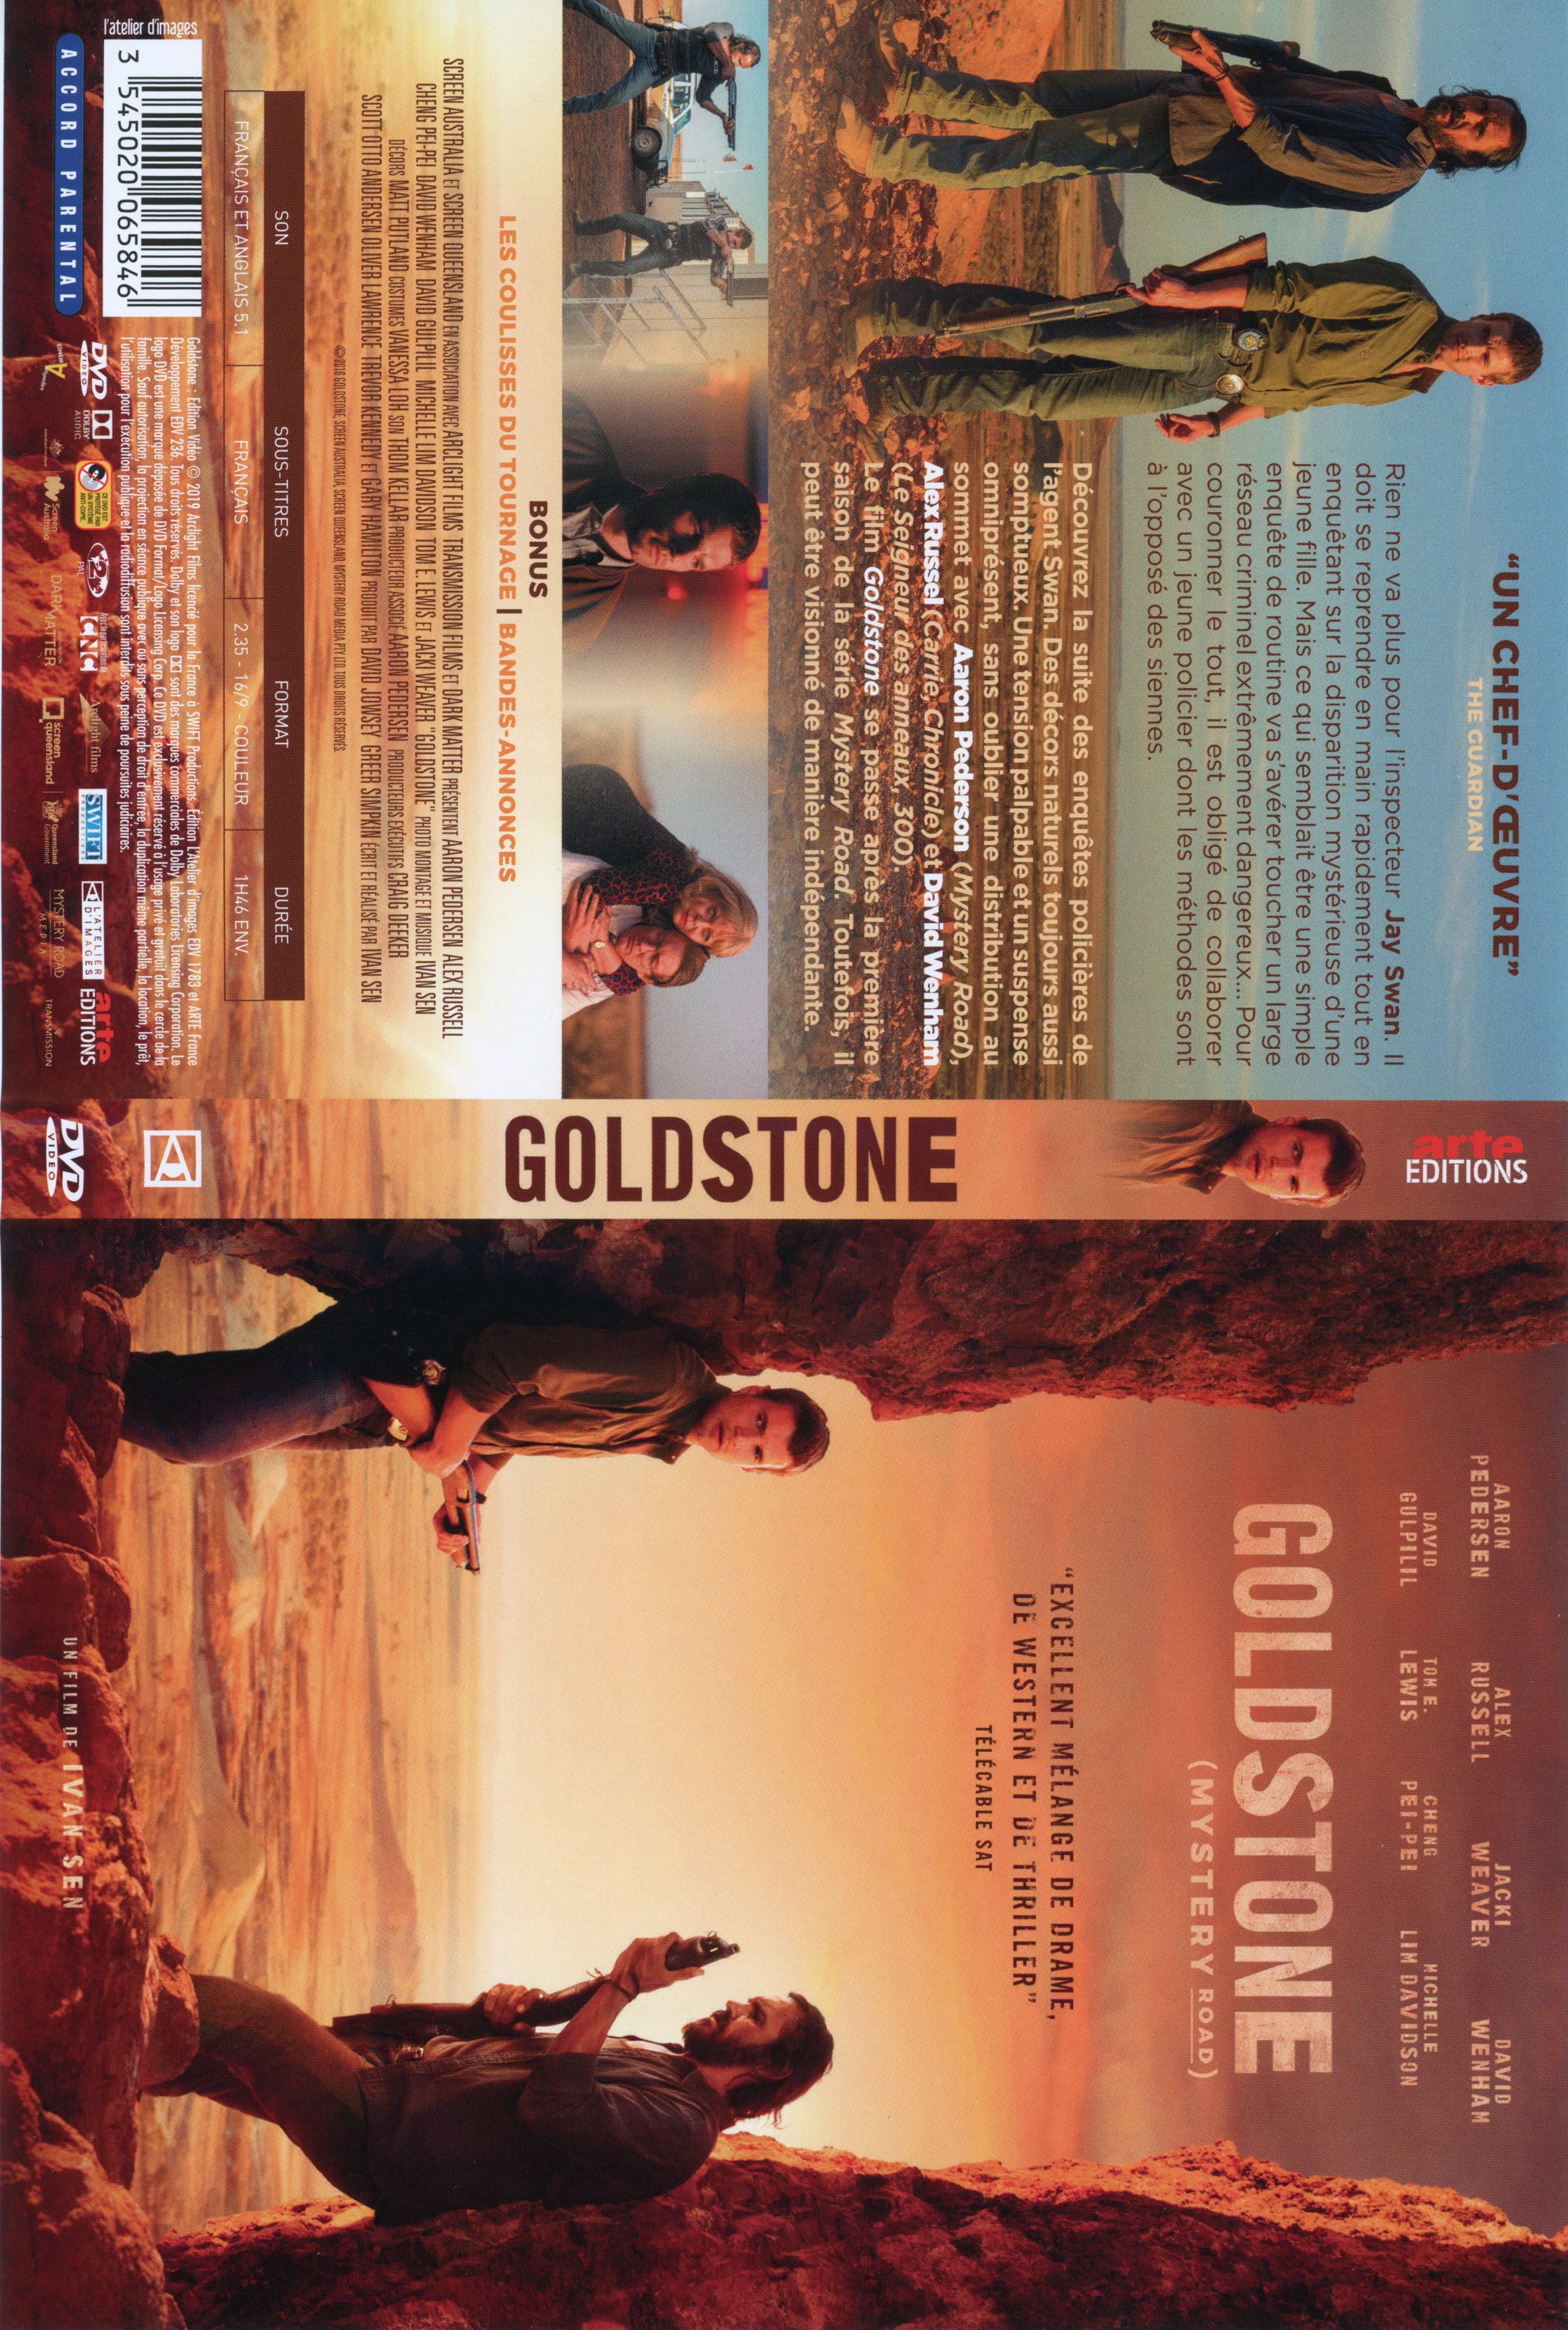 Jaquette DVD Goldstone